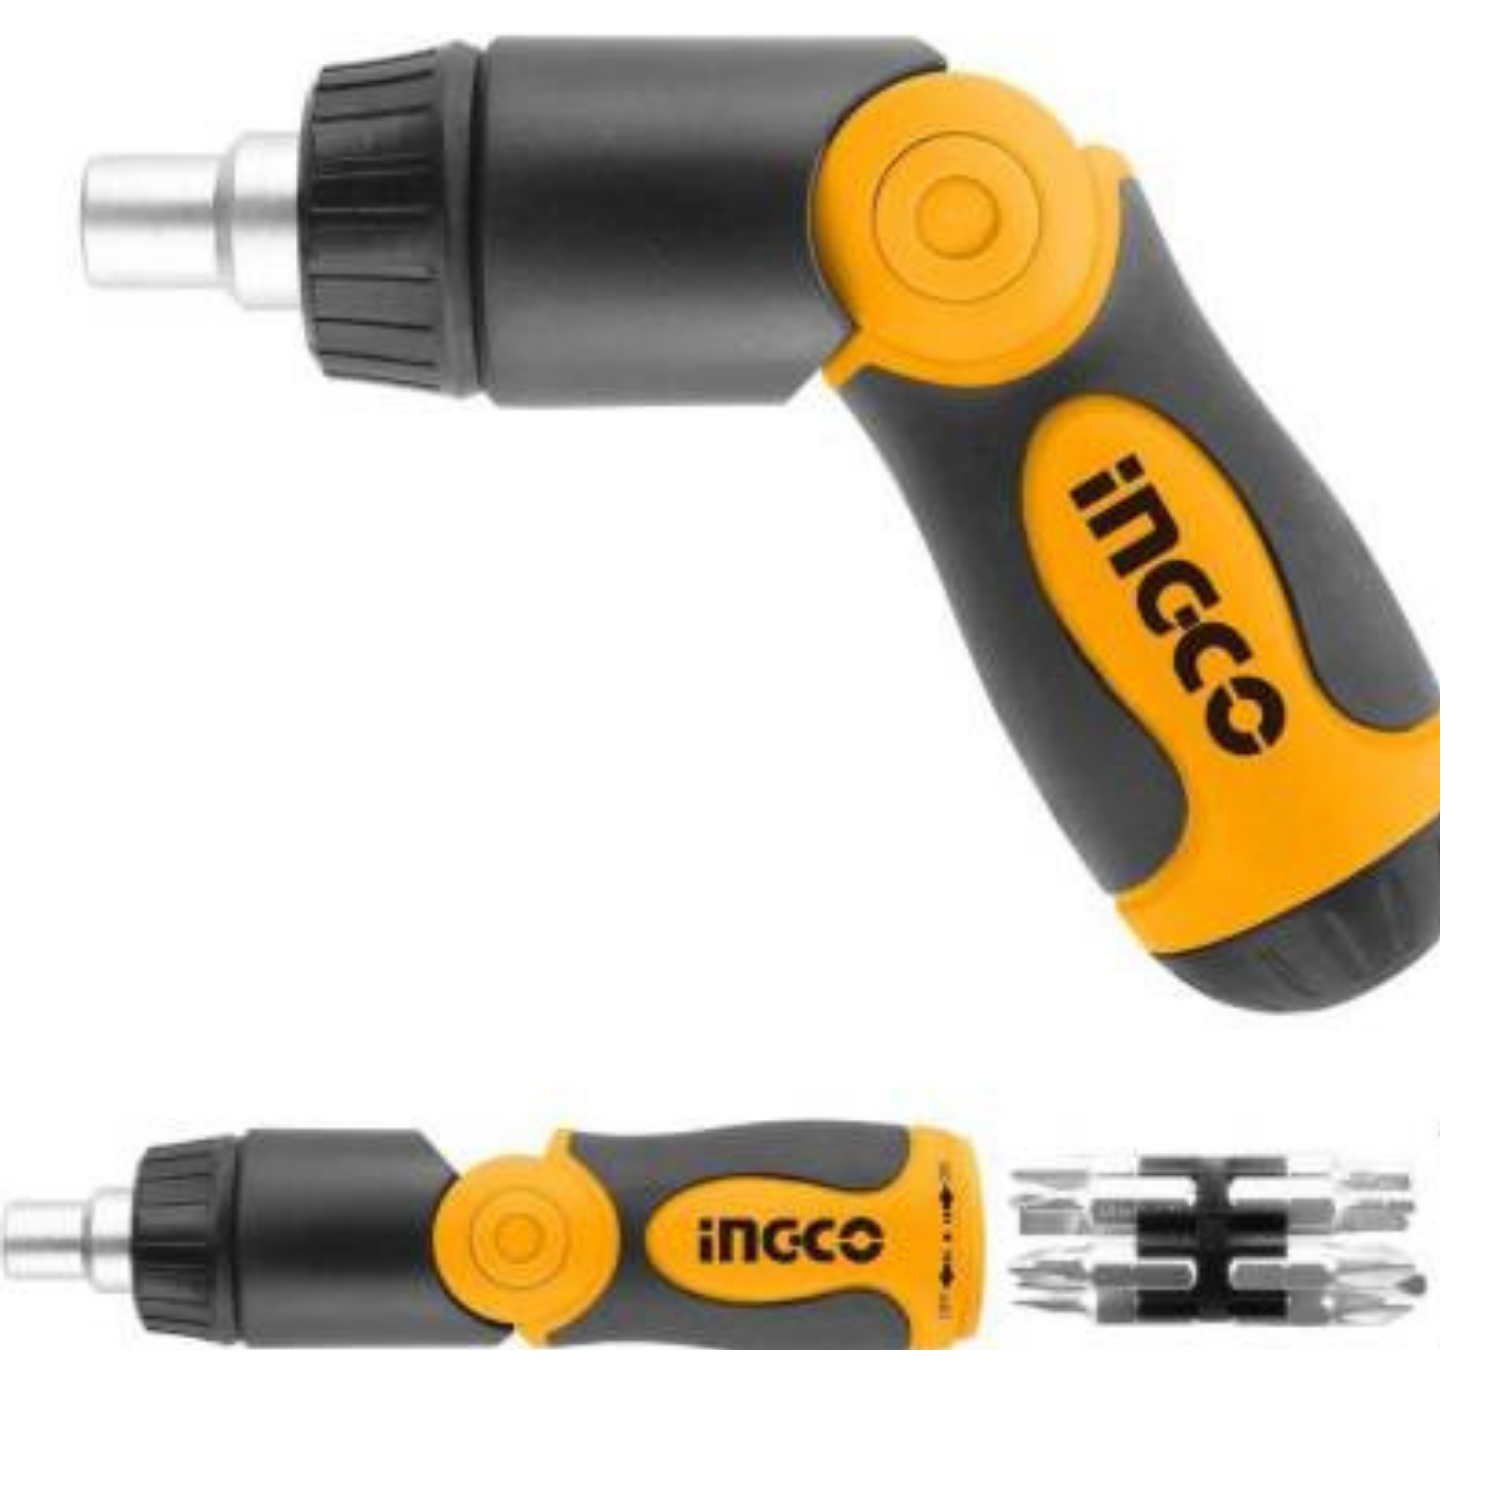 Ingco AKISD1208 13 IN 1 Ratchet screwdriver set